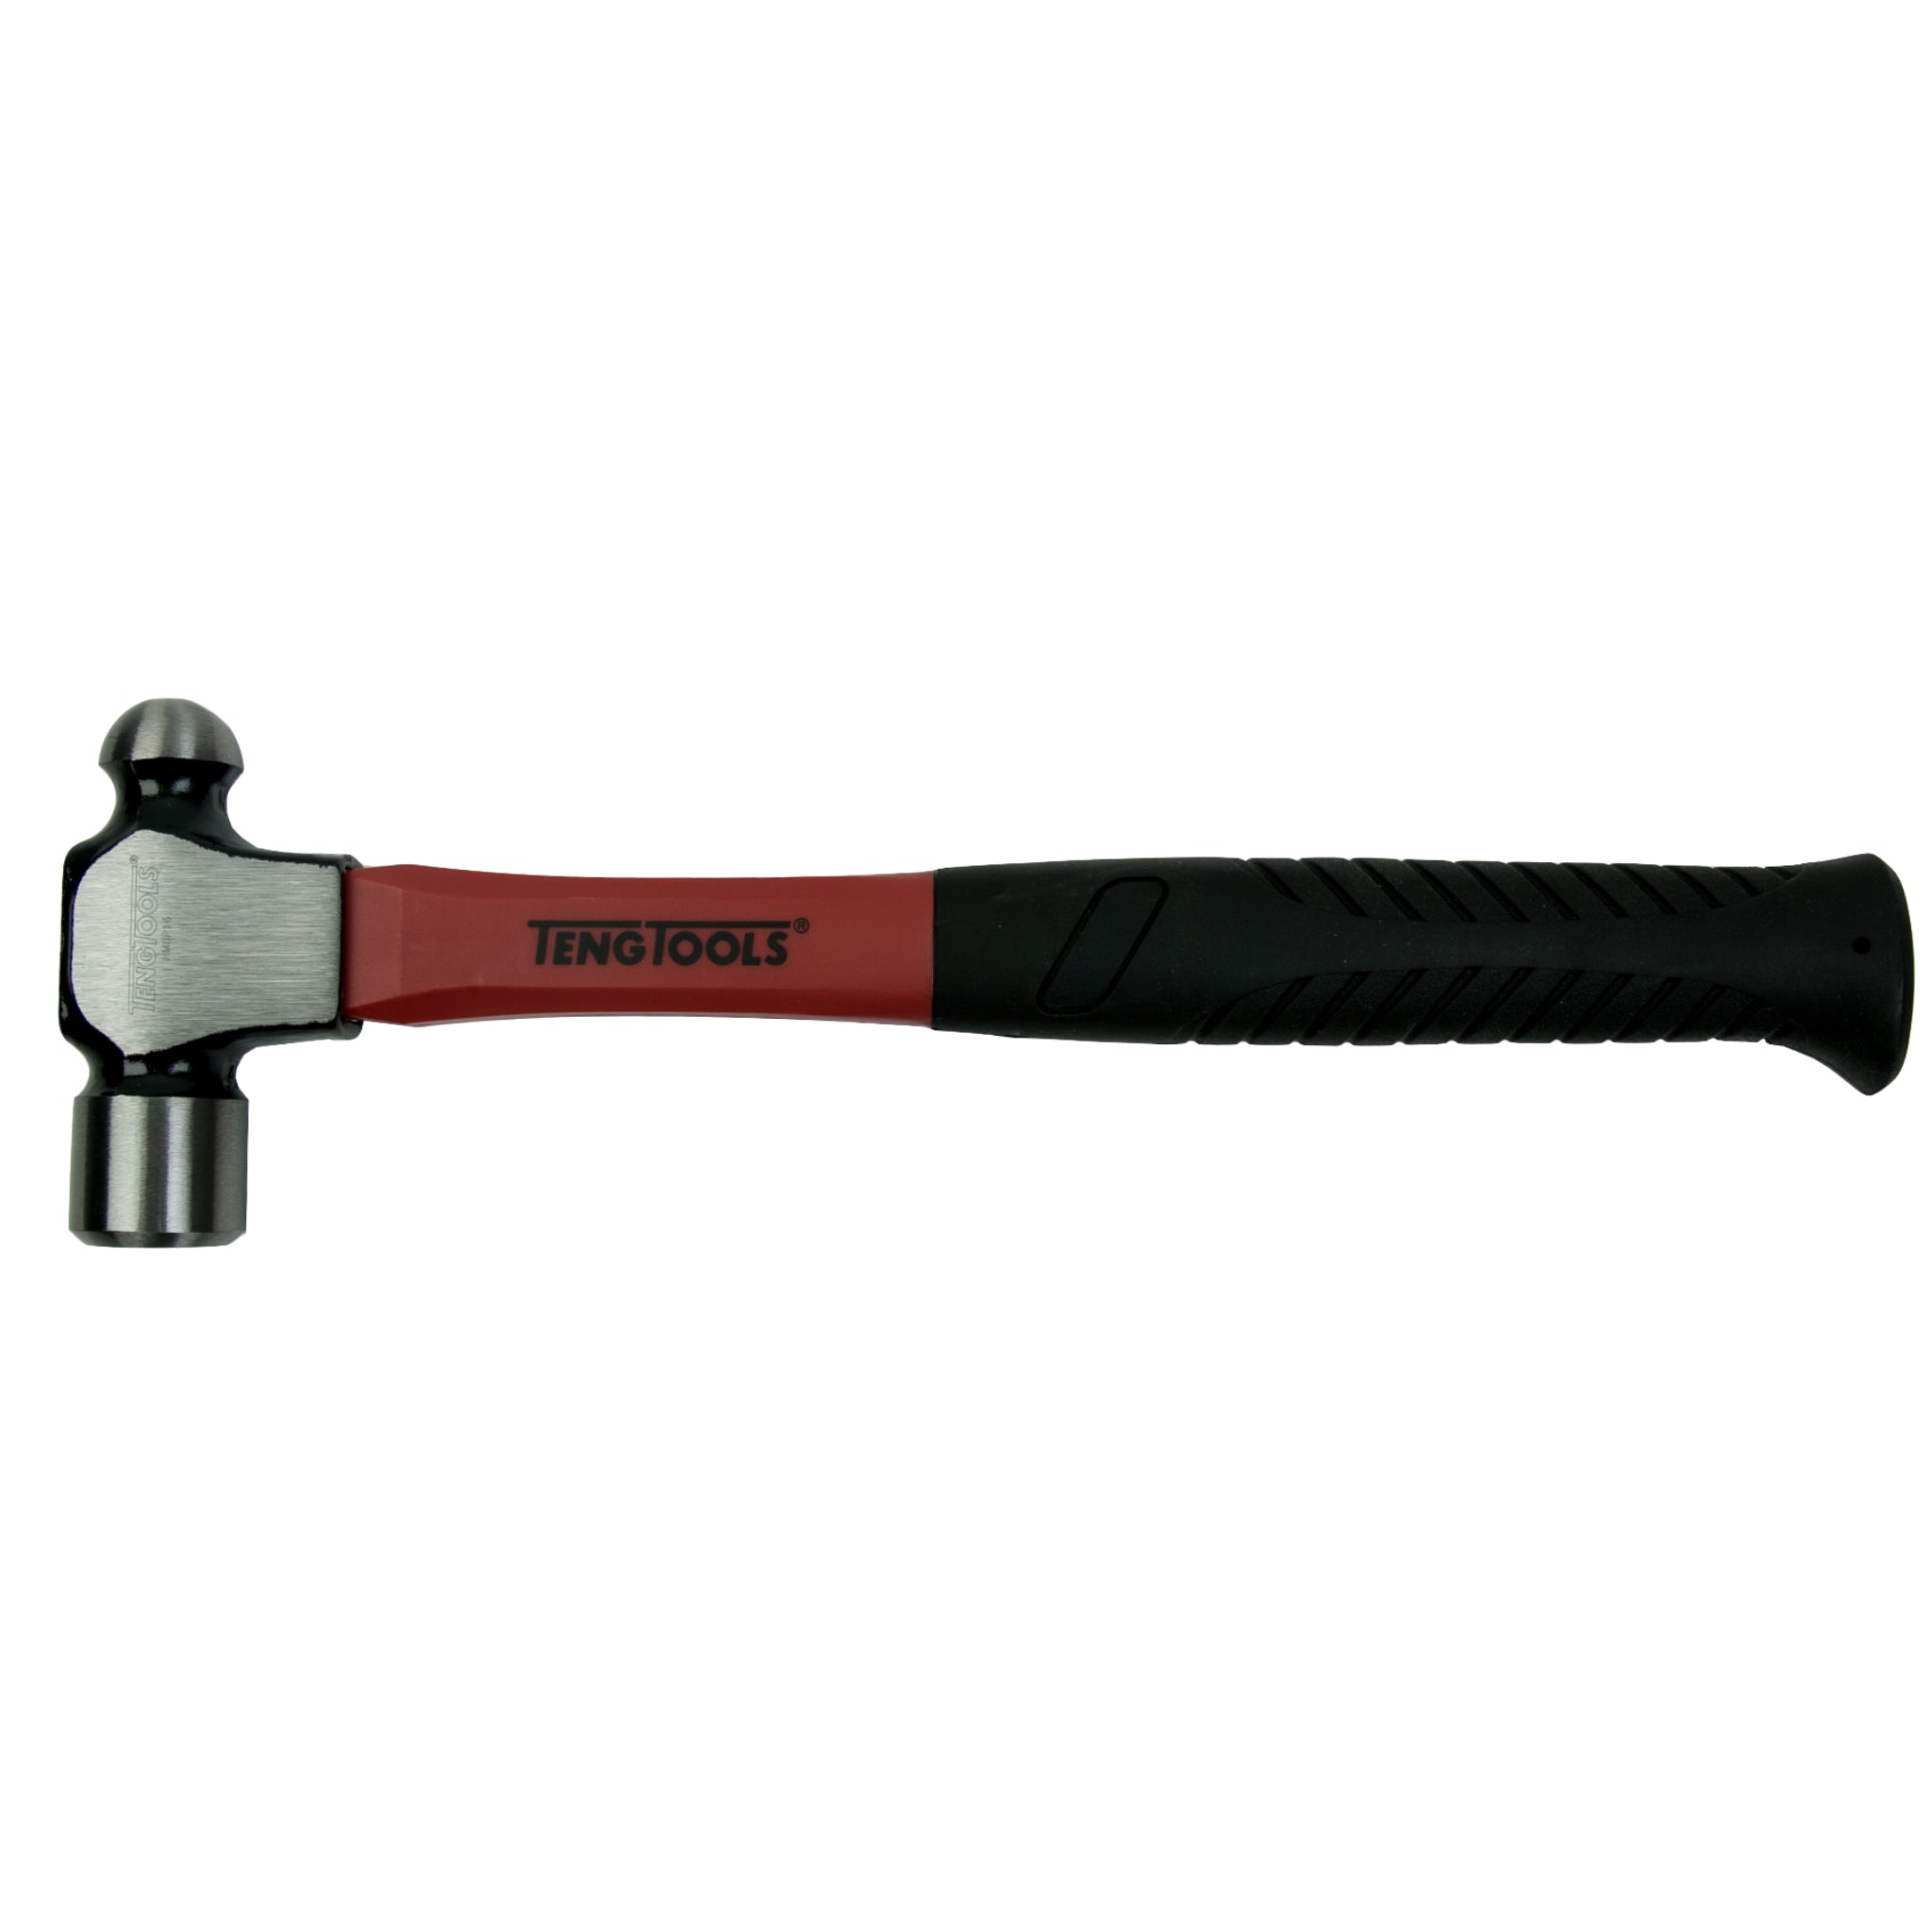 Teng Tools Ball Pein Hammer Range 12, 16, 24 And 32 Ounce (Oz) Hammers - 24 Oz